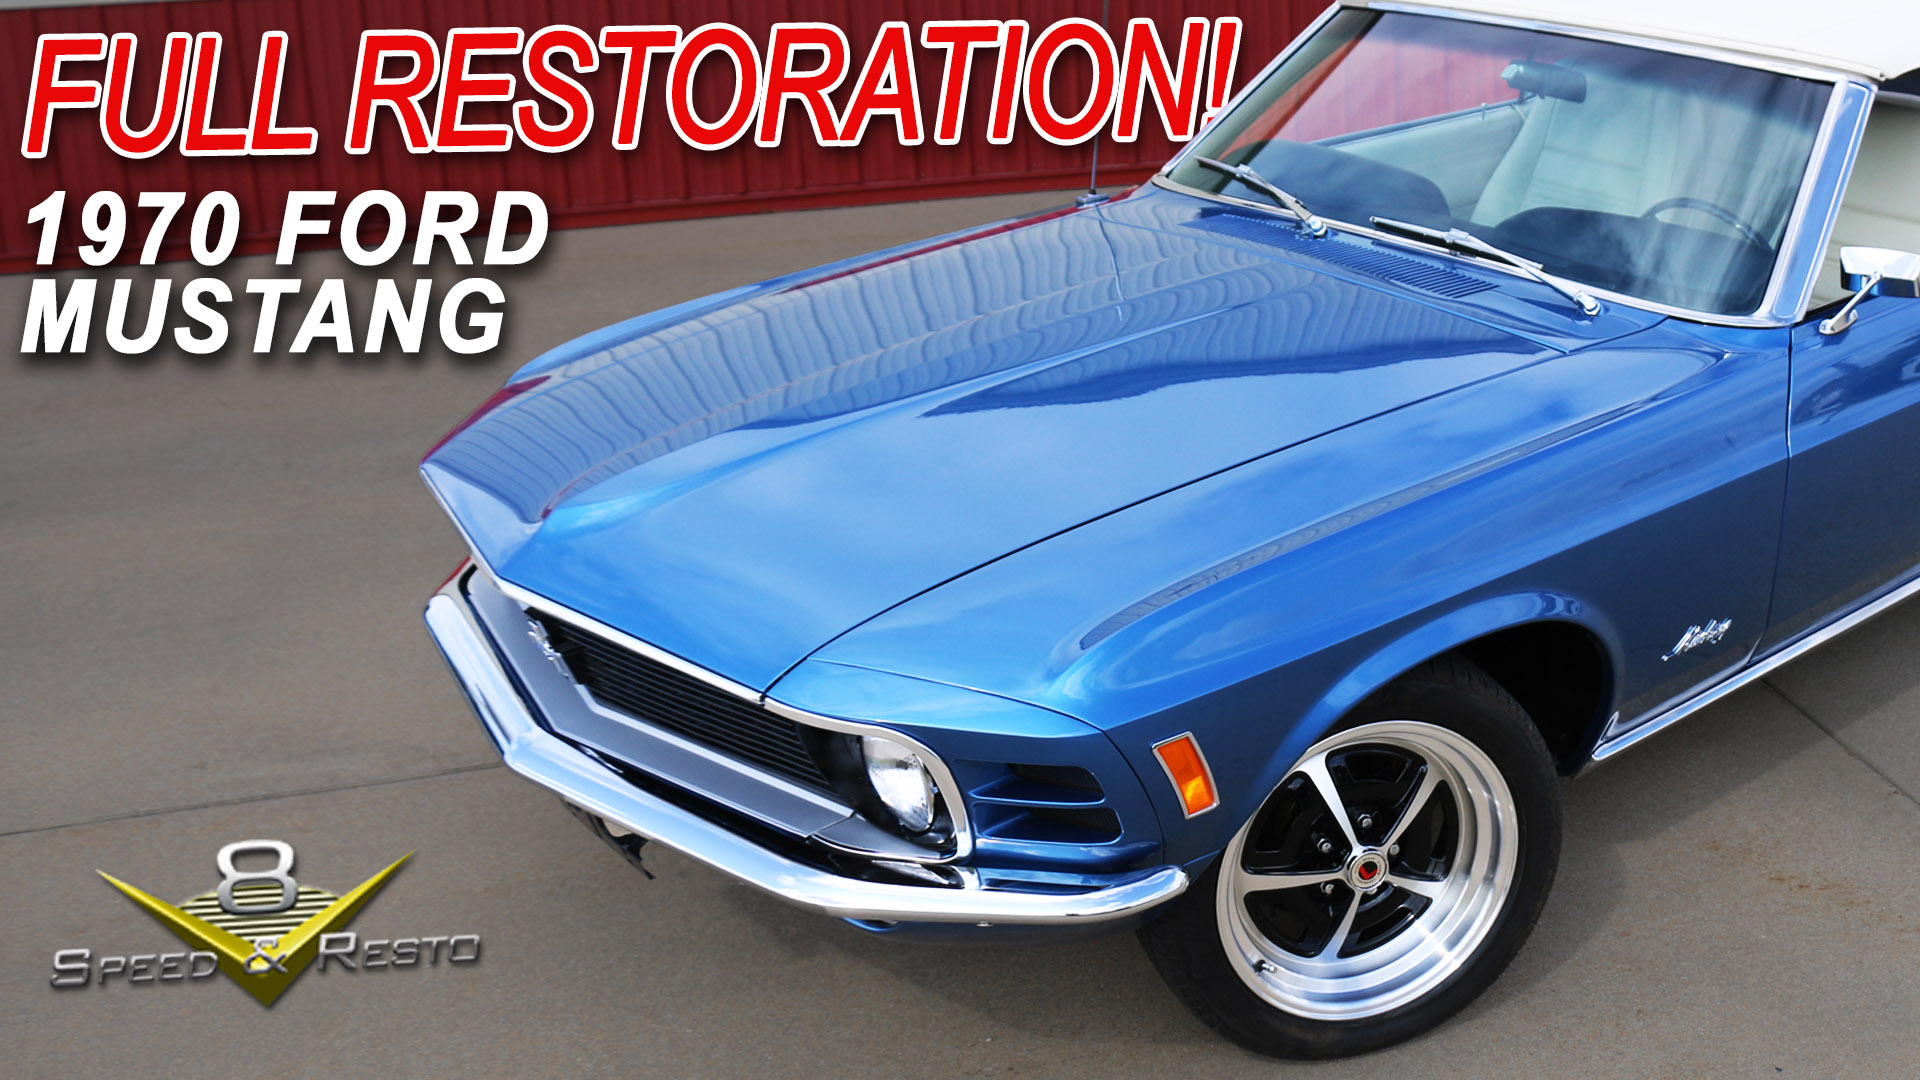 1970 Ford Mustang Restoration at V8 Speed and Resto Shop